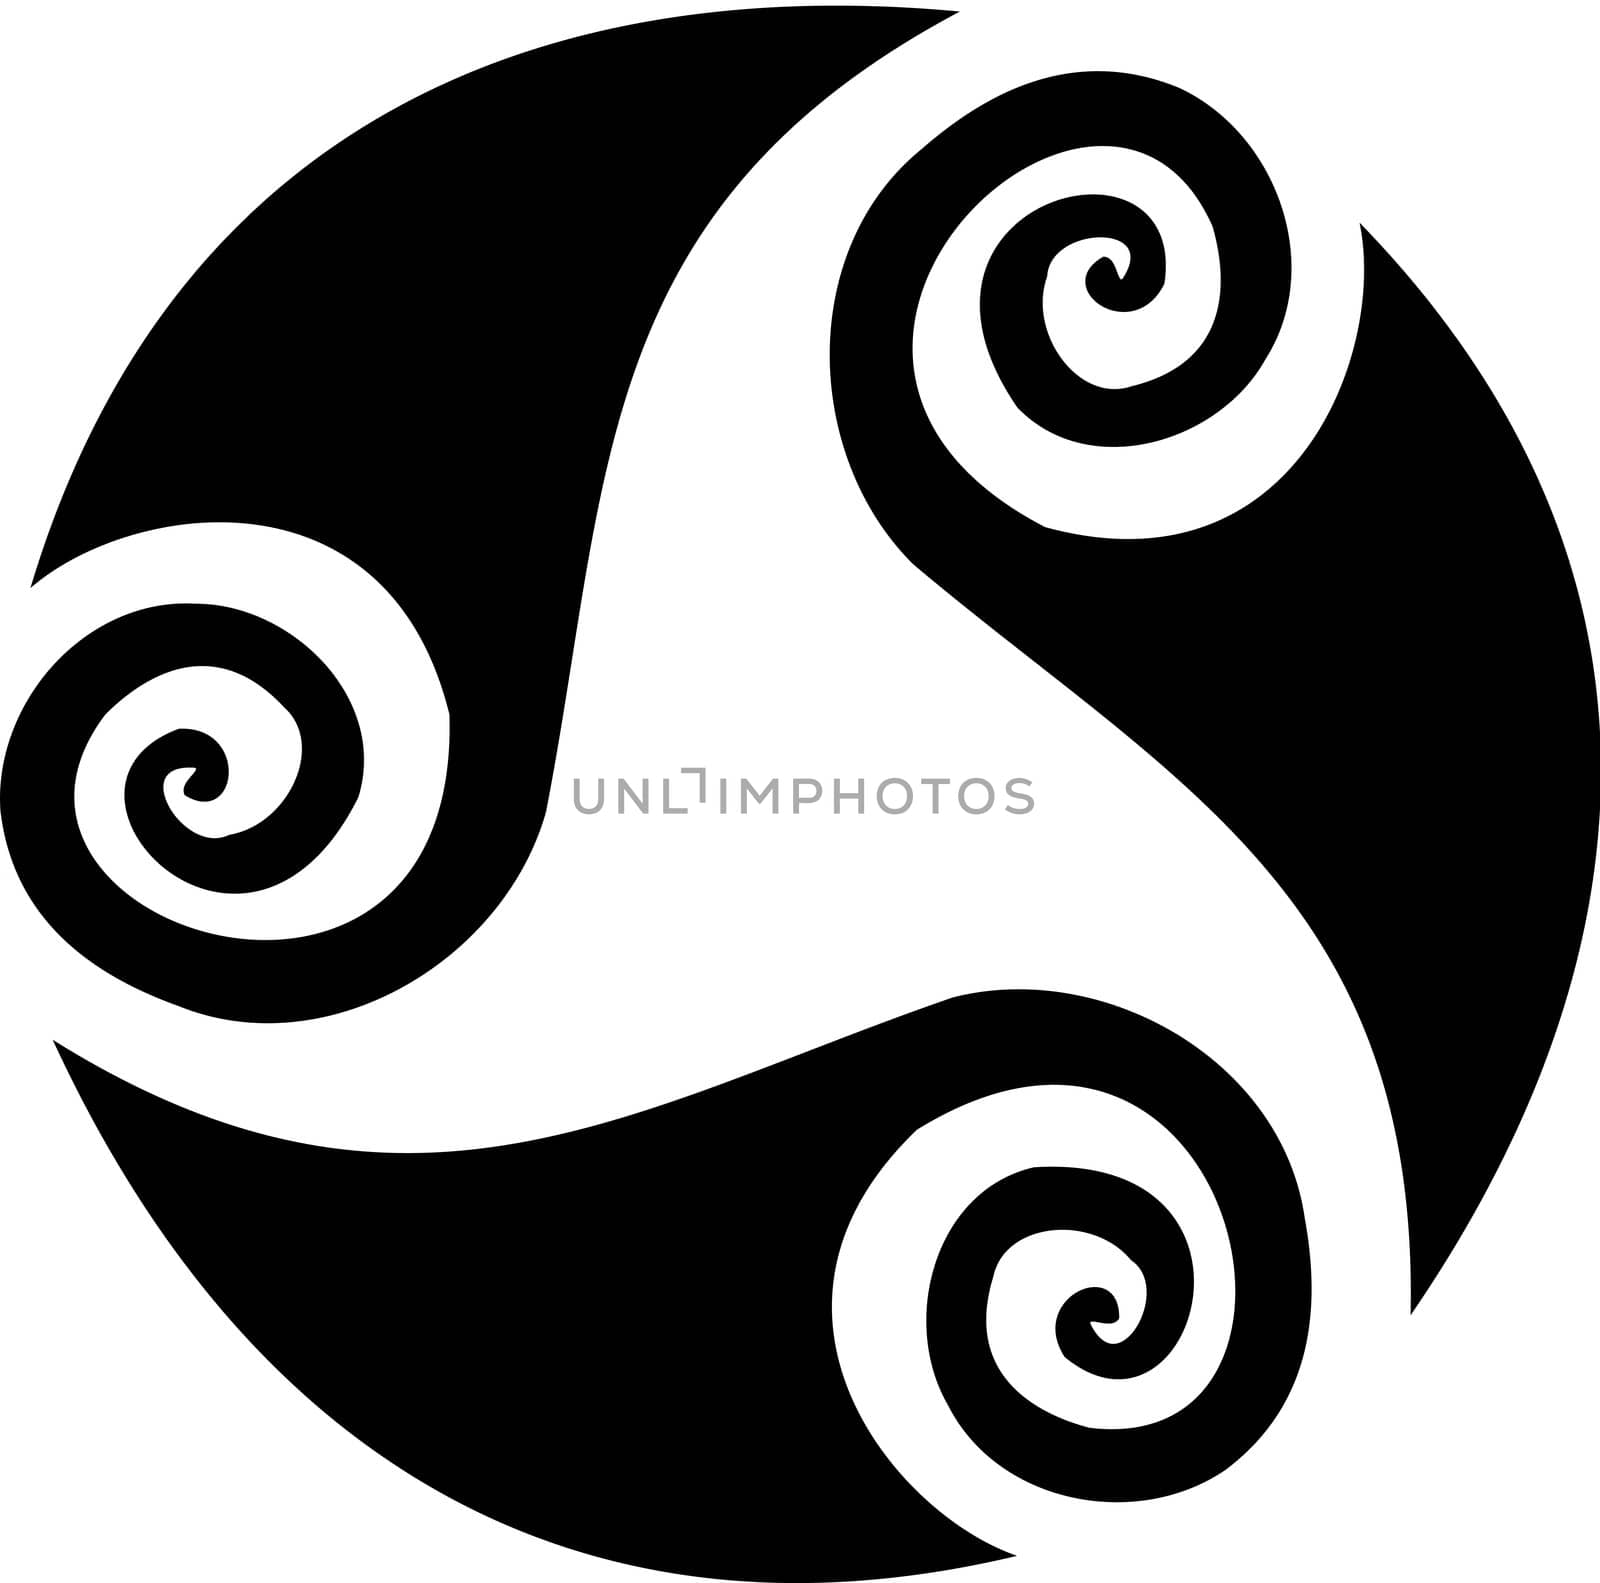 Waves drawings forming a spyral circular tattoo.